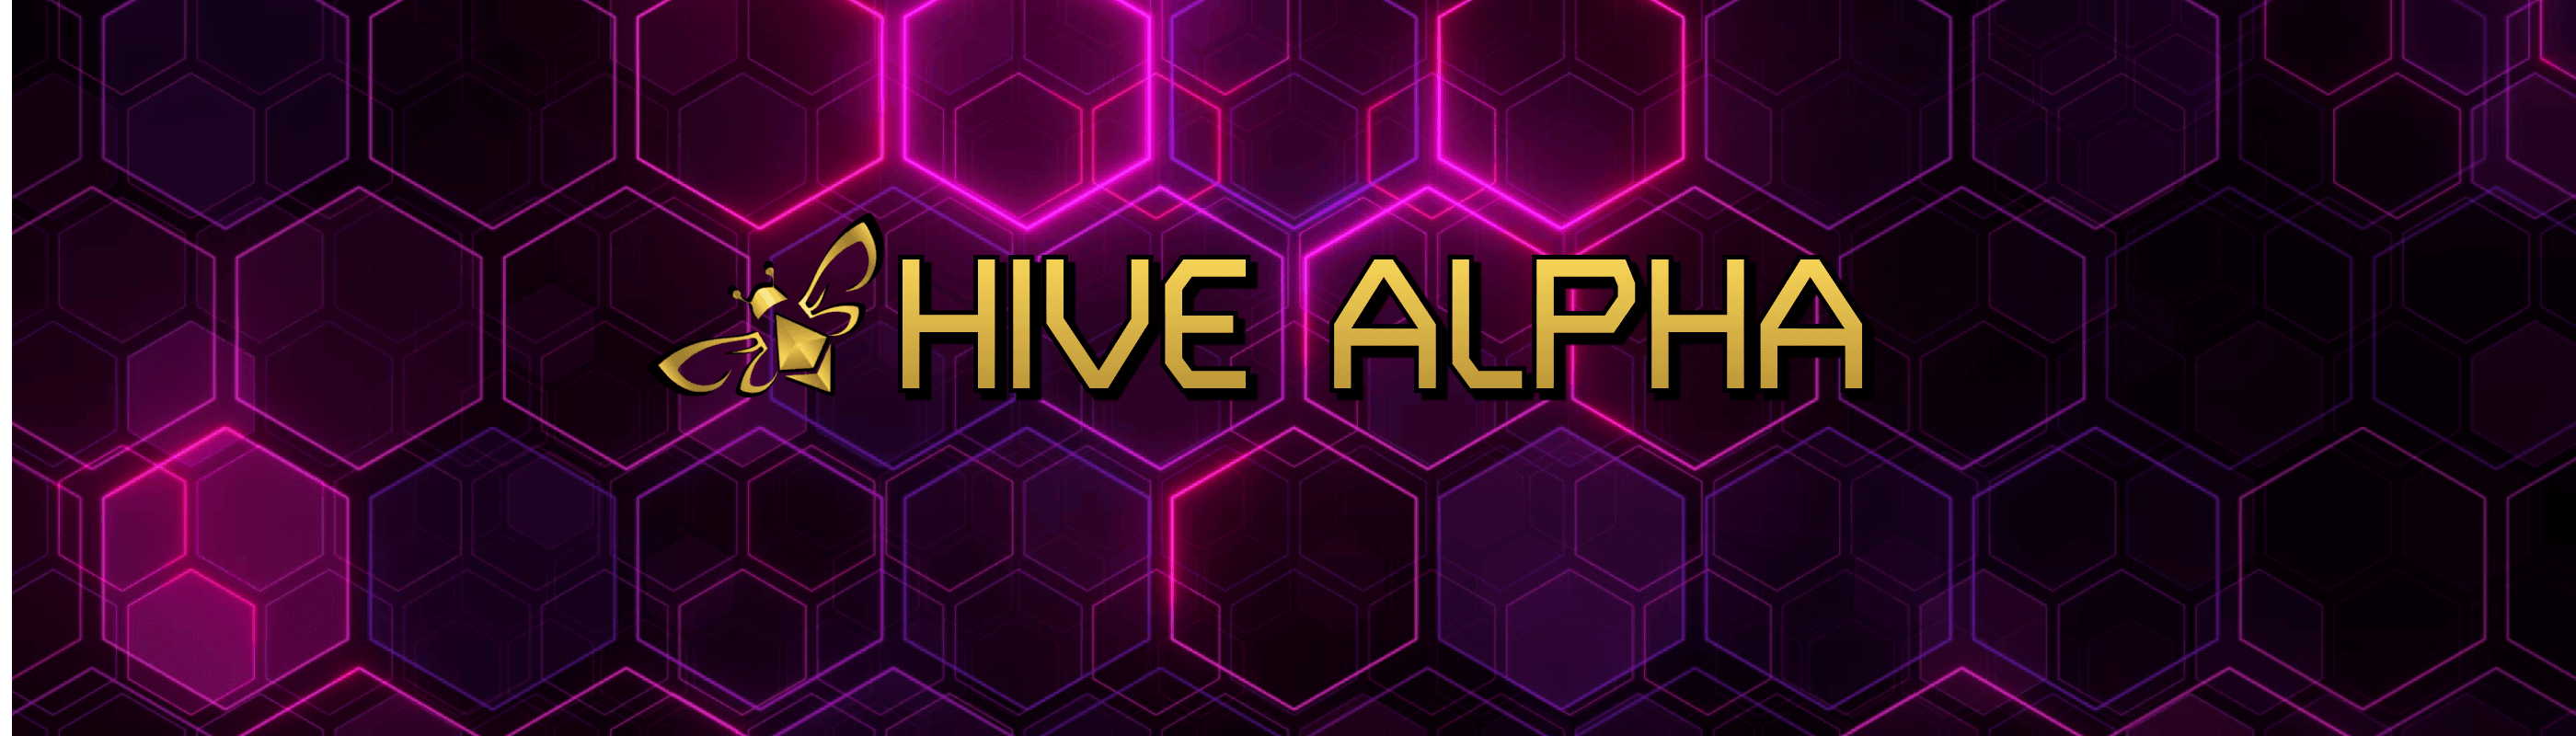 Hive-Alpha banner